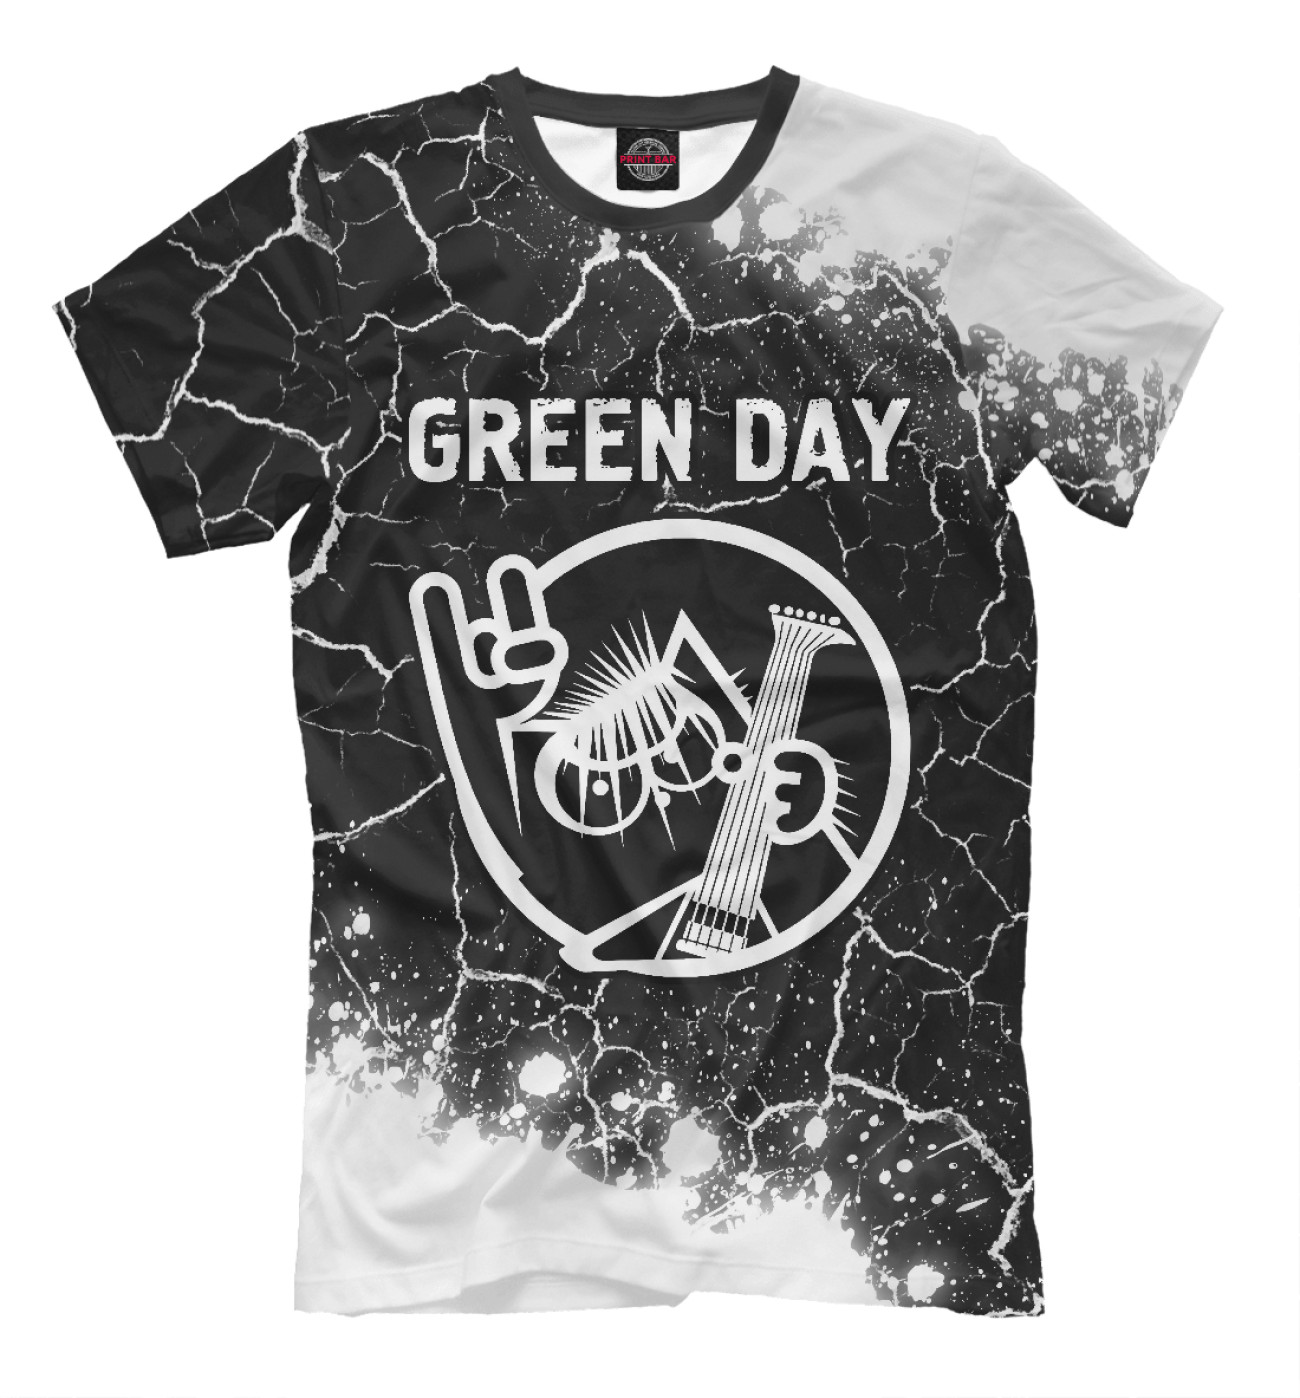 Мужская Футболка Green Day | Кот, артикул: GRE-481977-fut-2